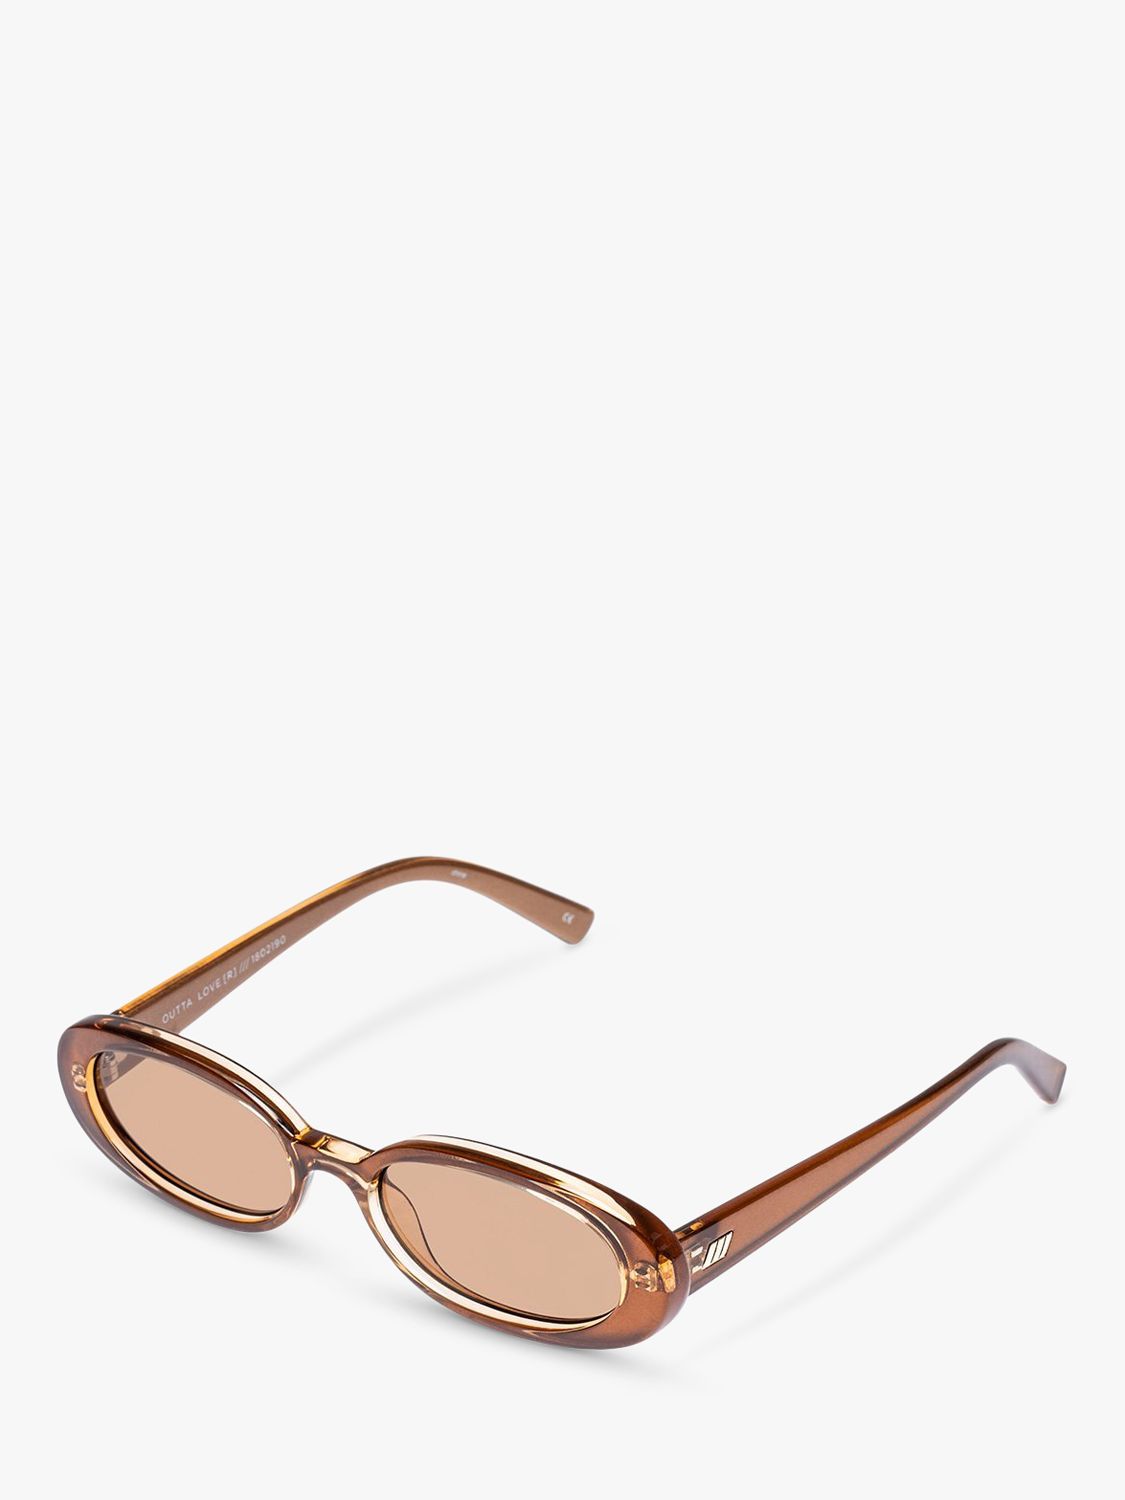 Buy Le Specs L5000177 Women's Outta Love Oval Sunglasses, Tan/Beige Online at johnlewis.com